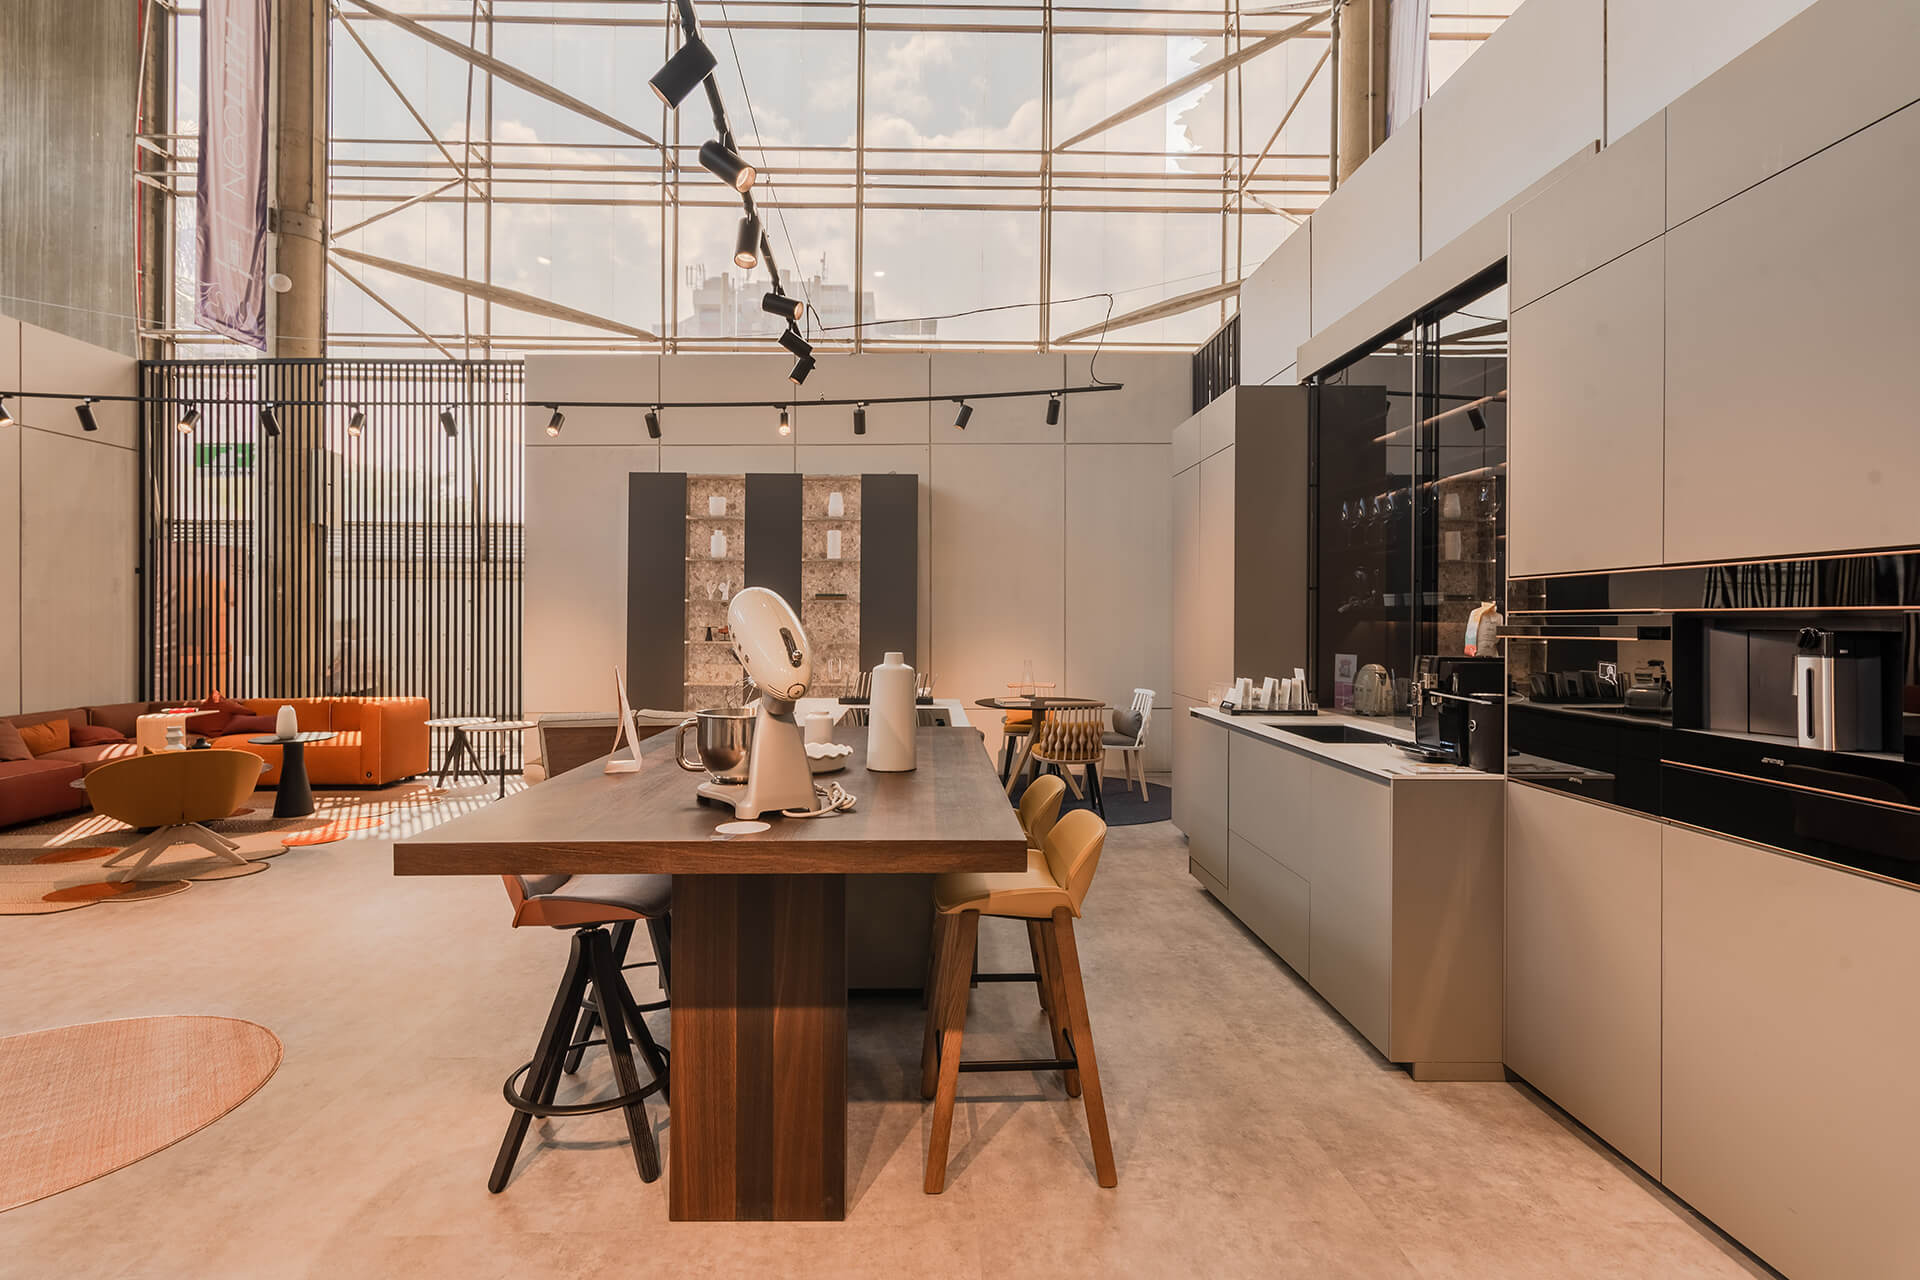 Santos kitchens Bogotá’s stand at Medellín’s Design Fair 2022